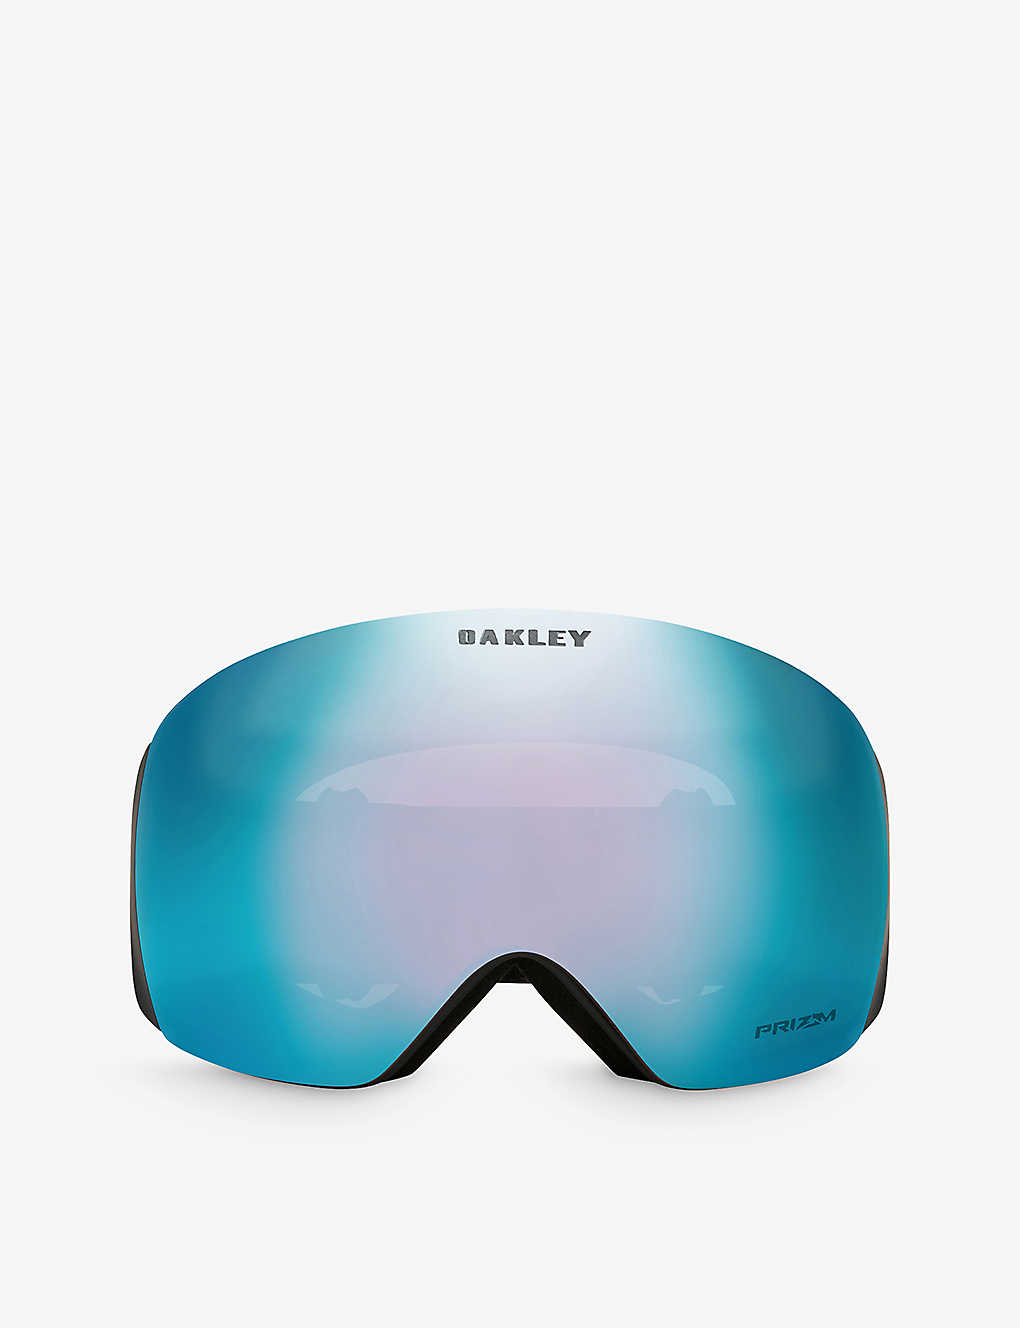 Shop Oakley Women's Blue Oo7050 Flight Deck L Ski Goggles